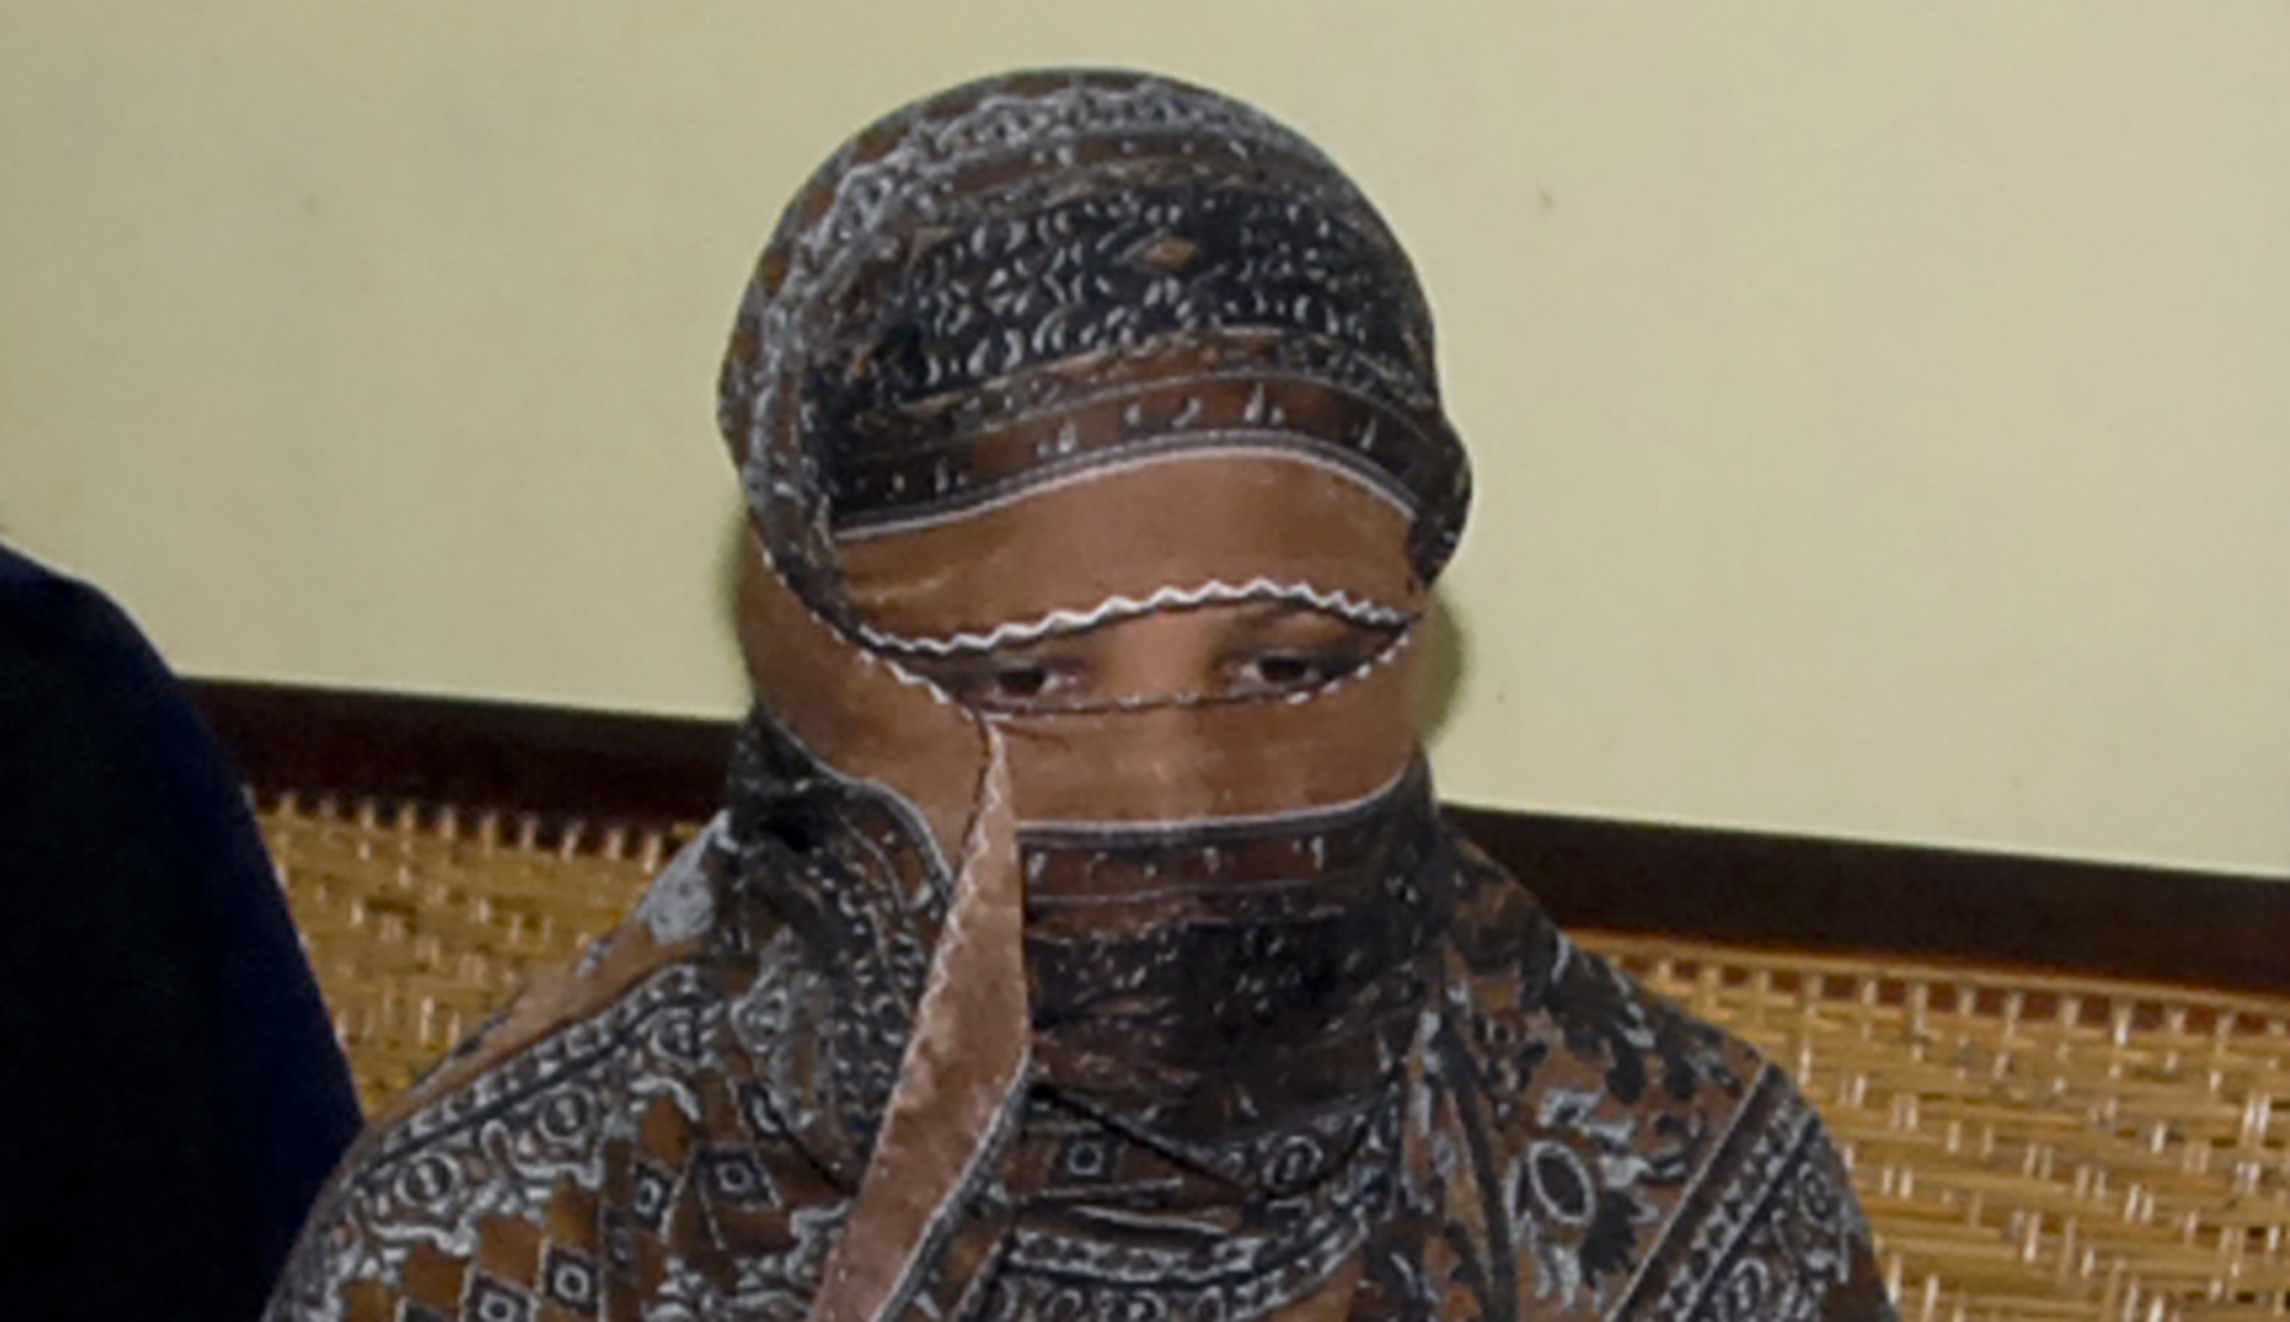 Pakistani Christian woman Asia Bibi at a prison in Sheikhupura near Lahore, Pakistan on Saturday, Nov. 20, 2010.